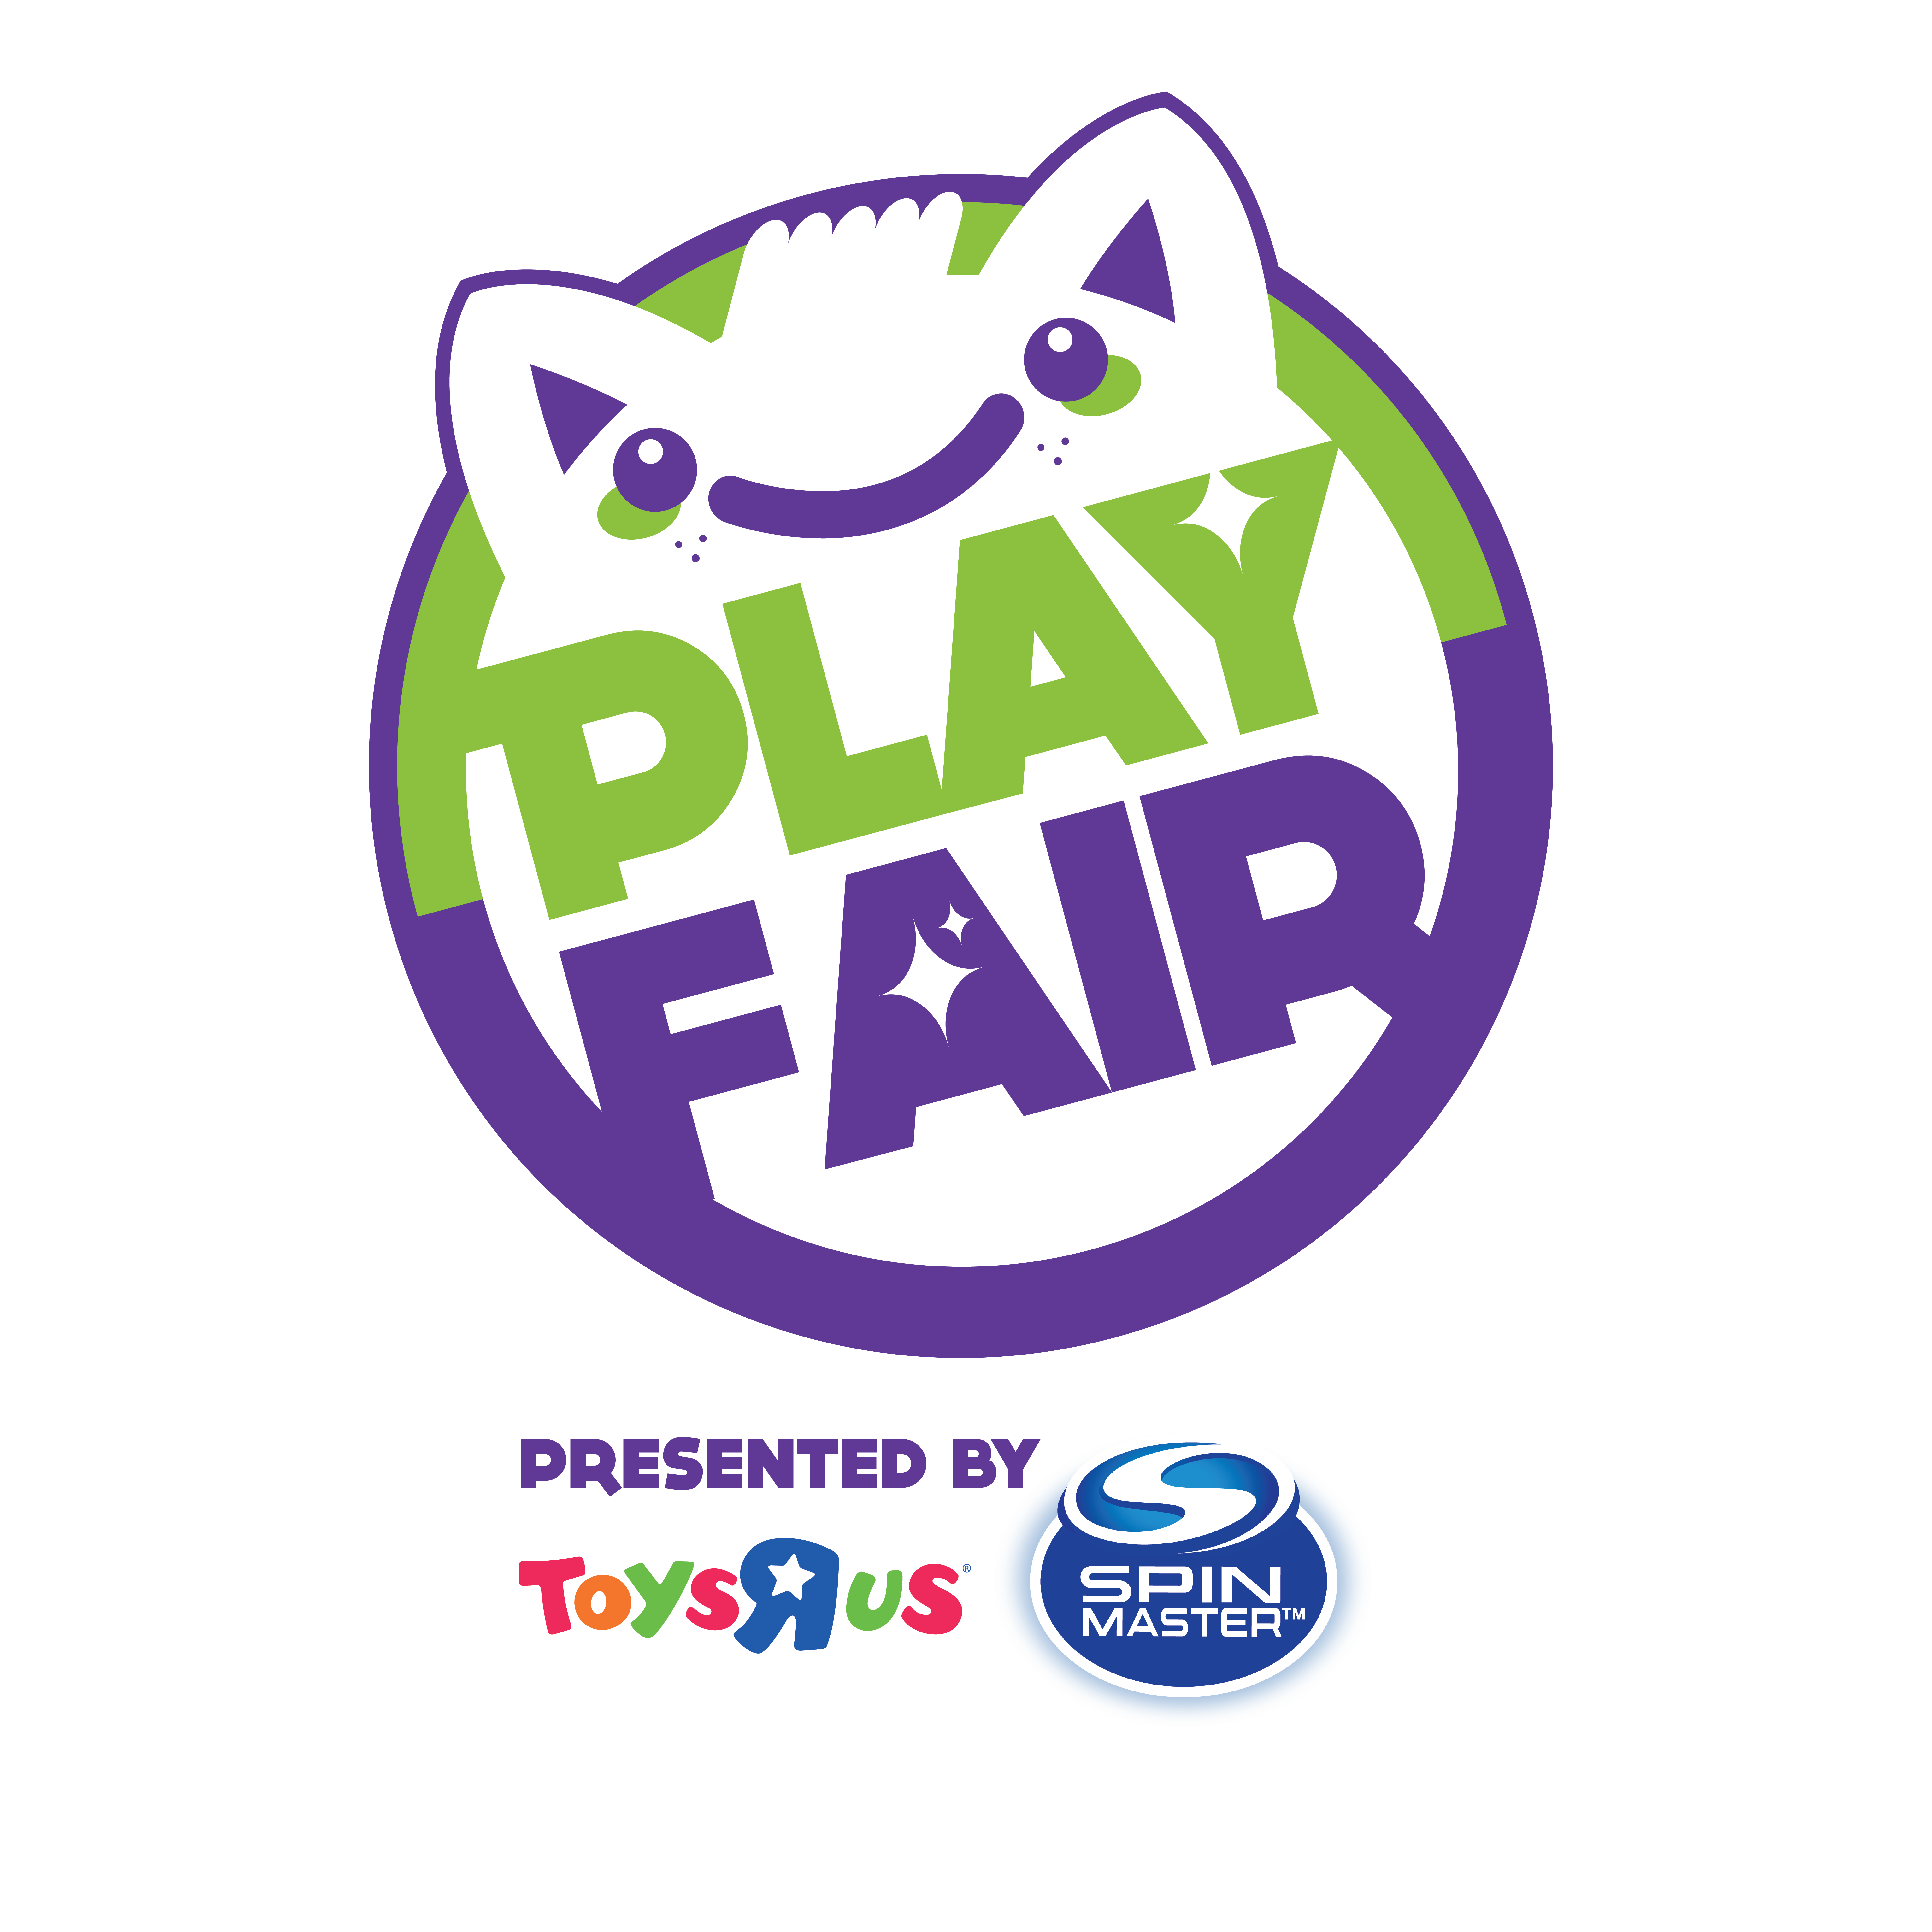 Play Fair 2017